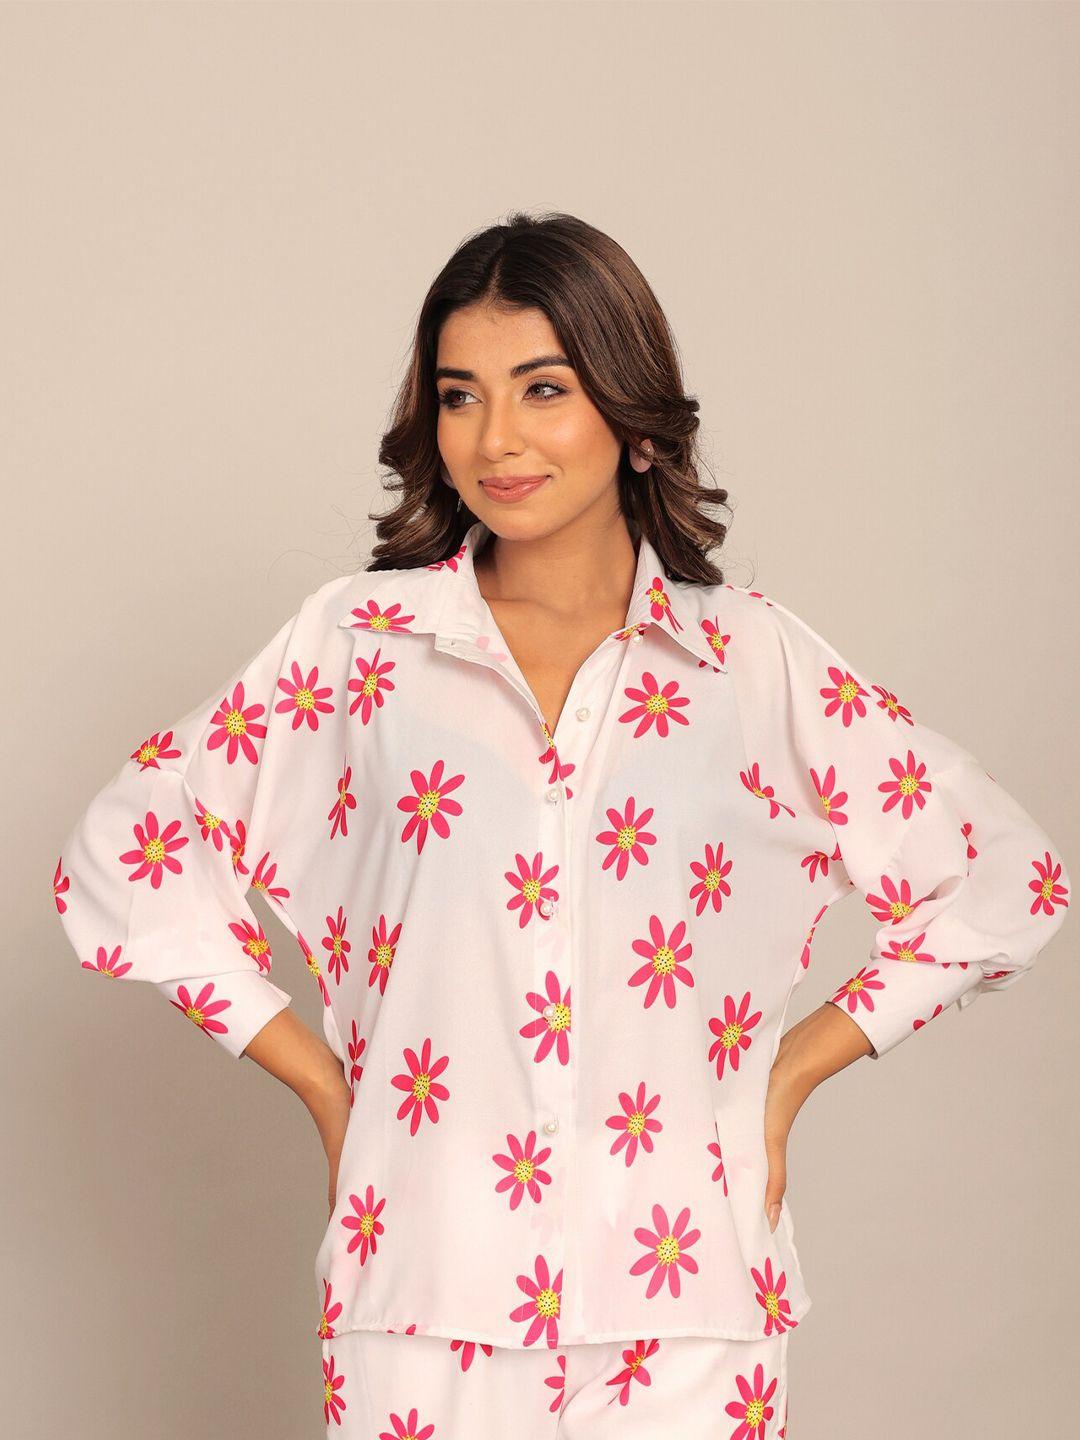 kaori by shreya agarwal bliss floral printed comfort opaque casual shirt